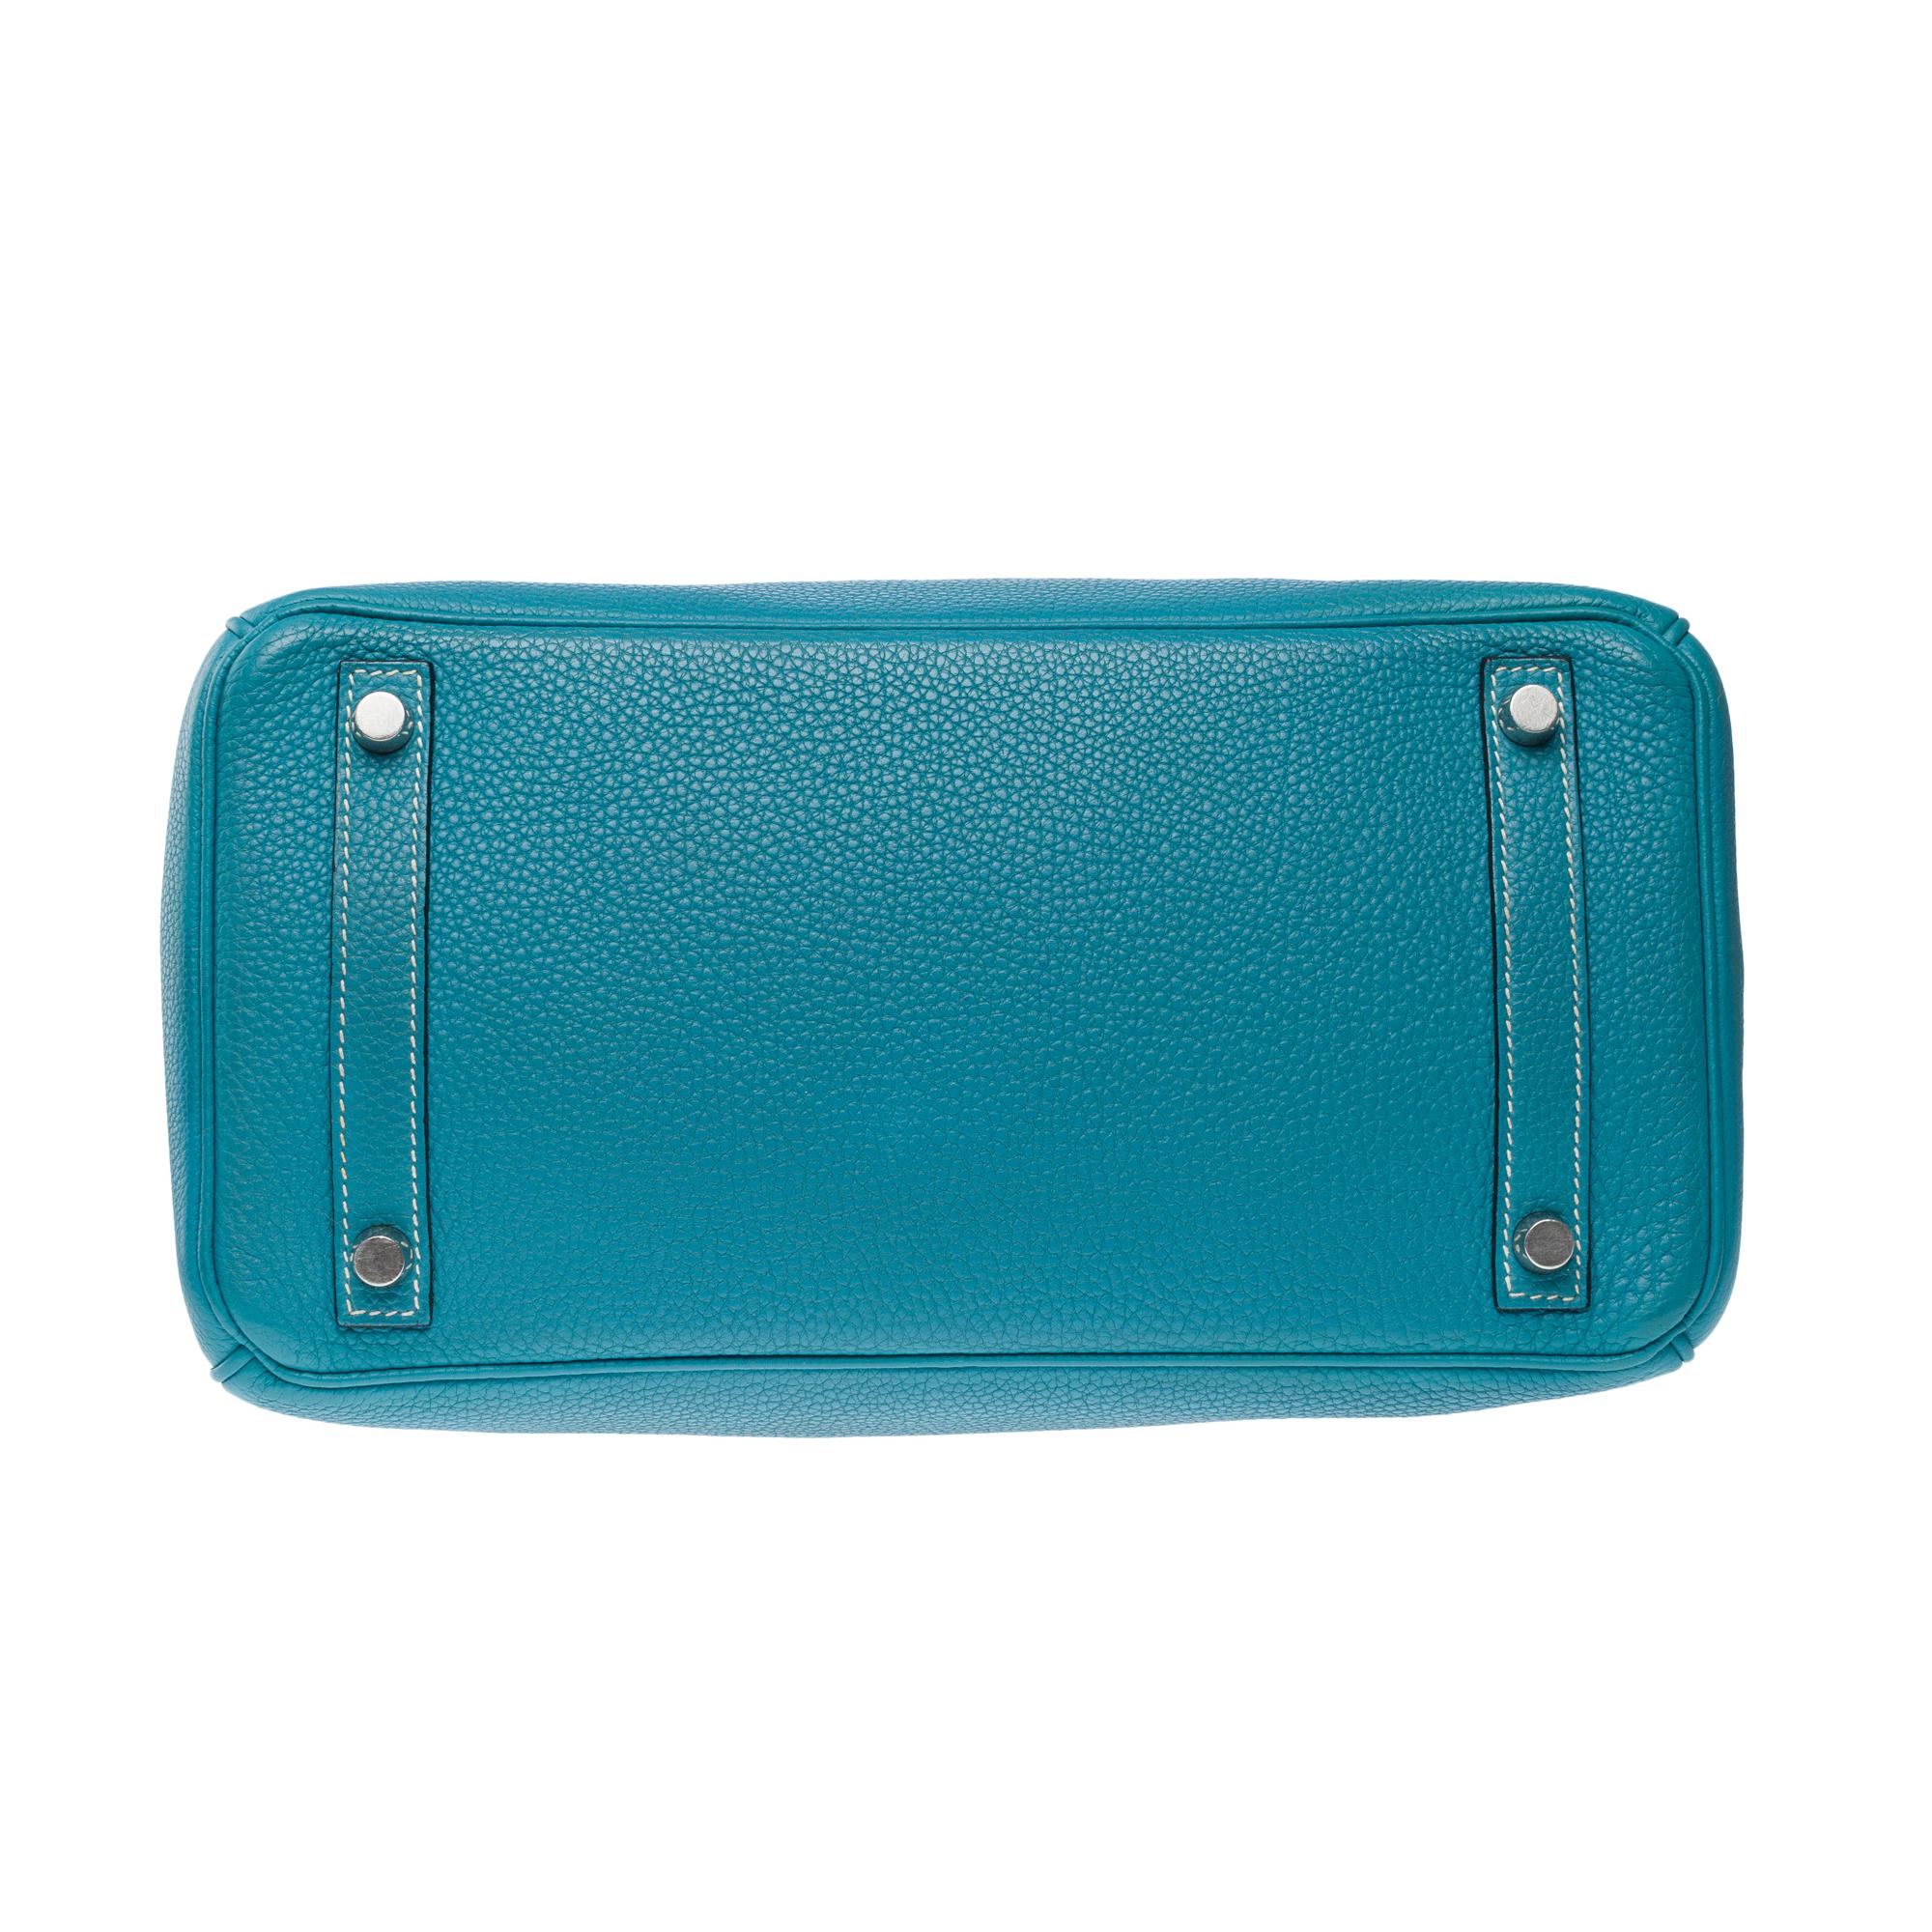 Splendid Hermes Birkin 30 handbag in Blue Jean Togo leather, SHW For Sale 7